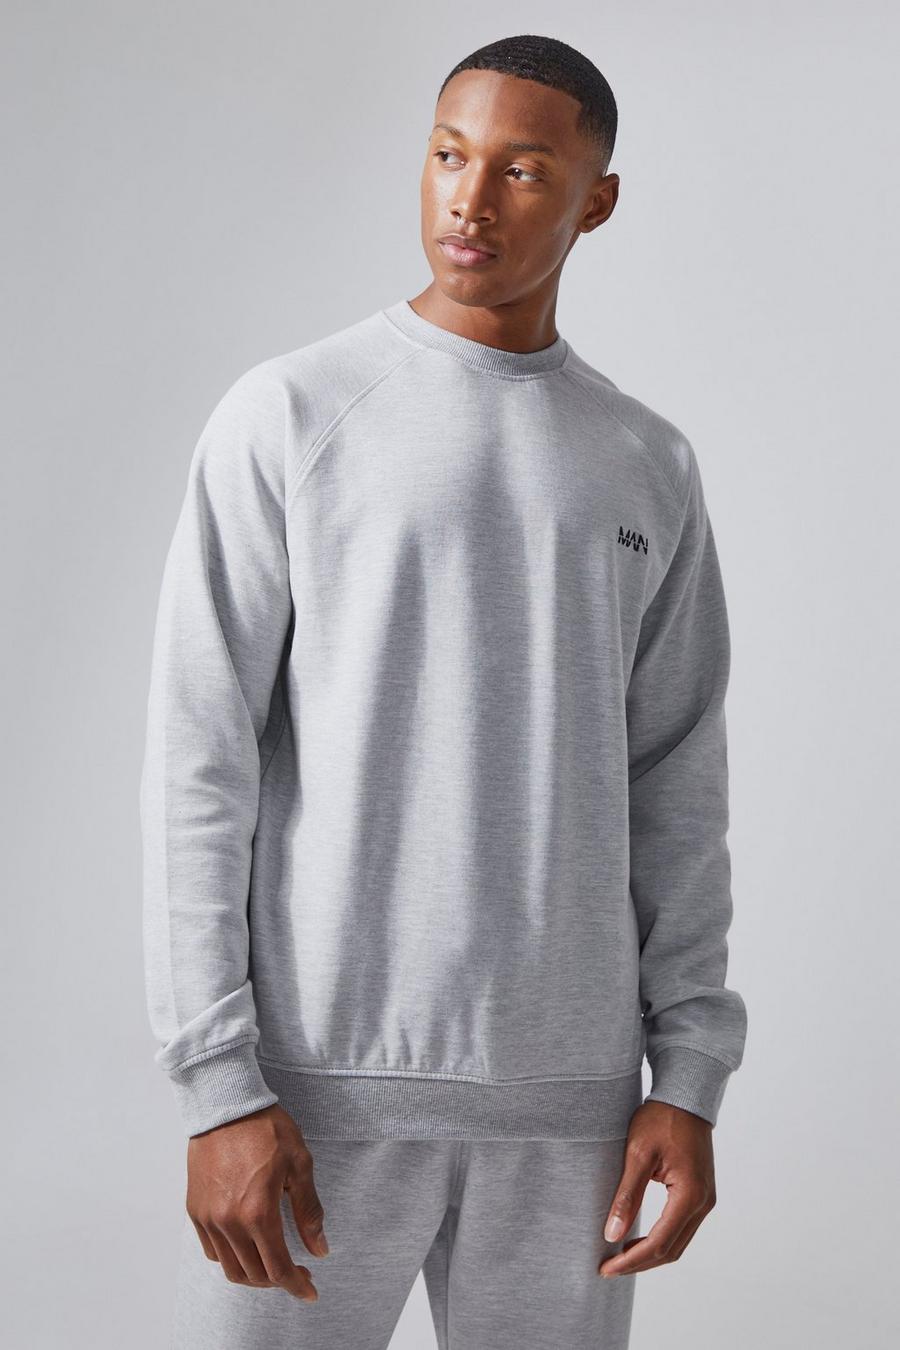 Man Active Sweatshirt, Grey marl